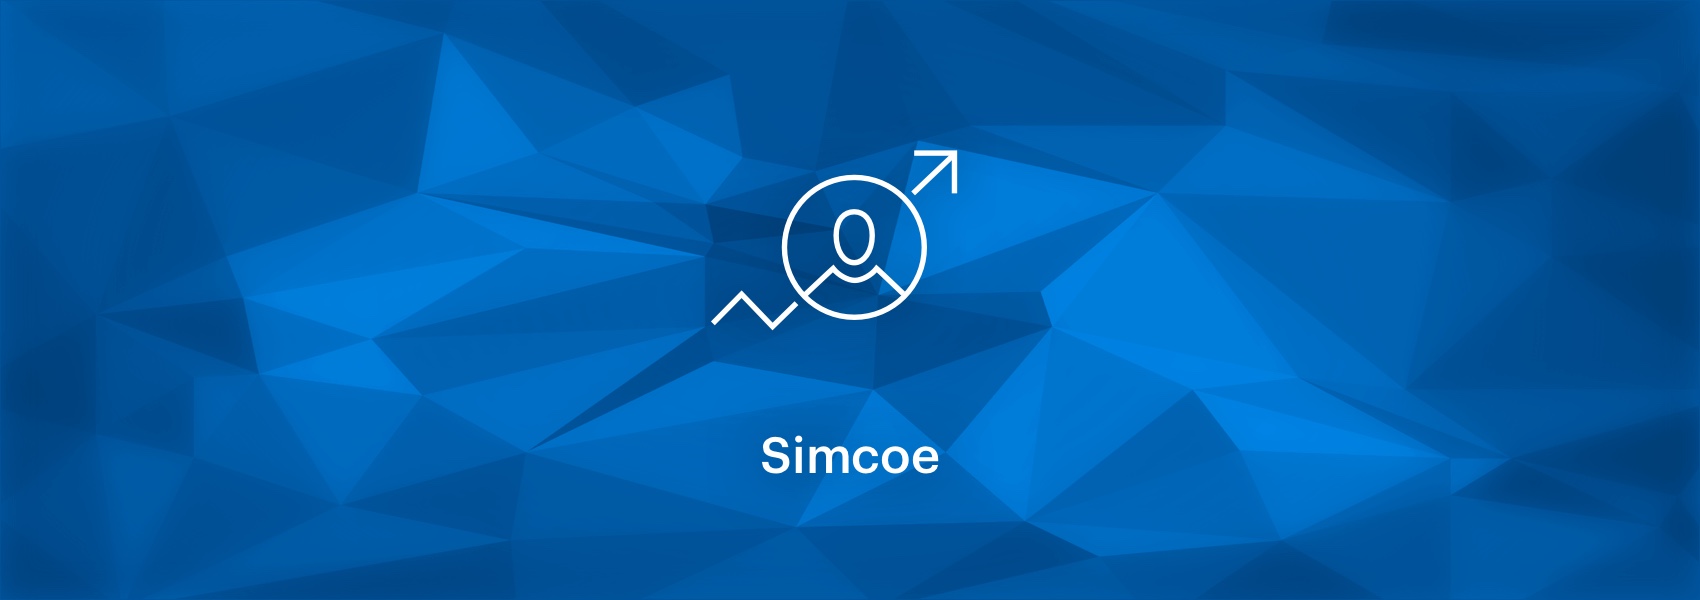 Simcoe_logo.jpg